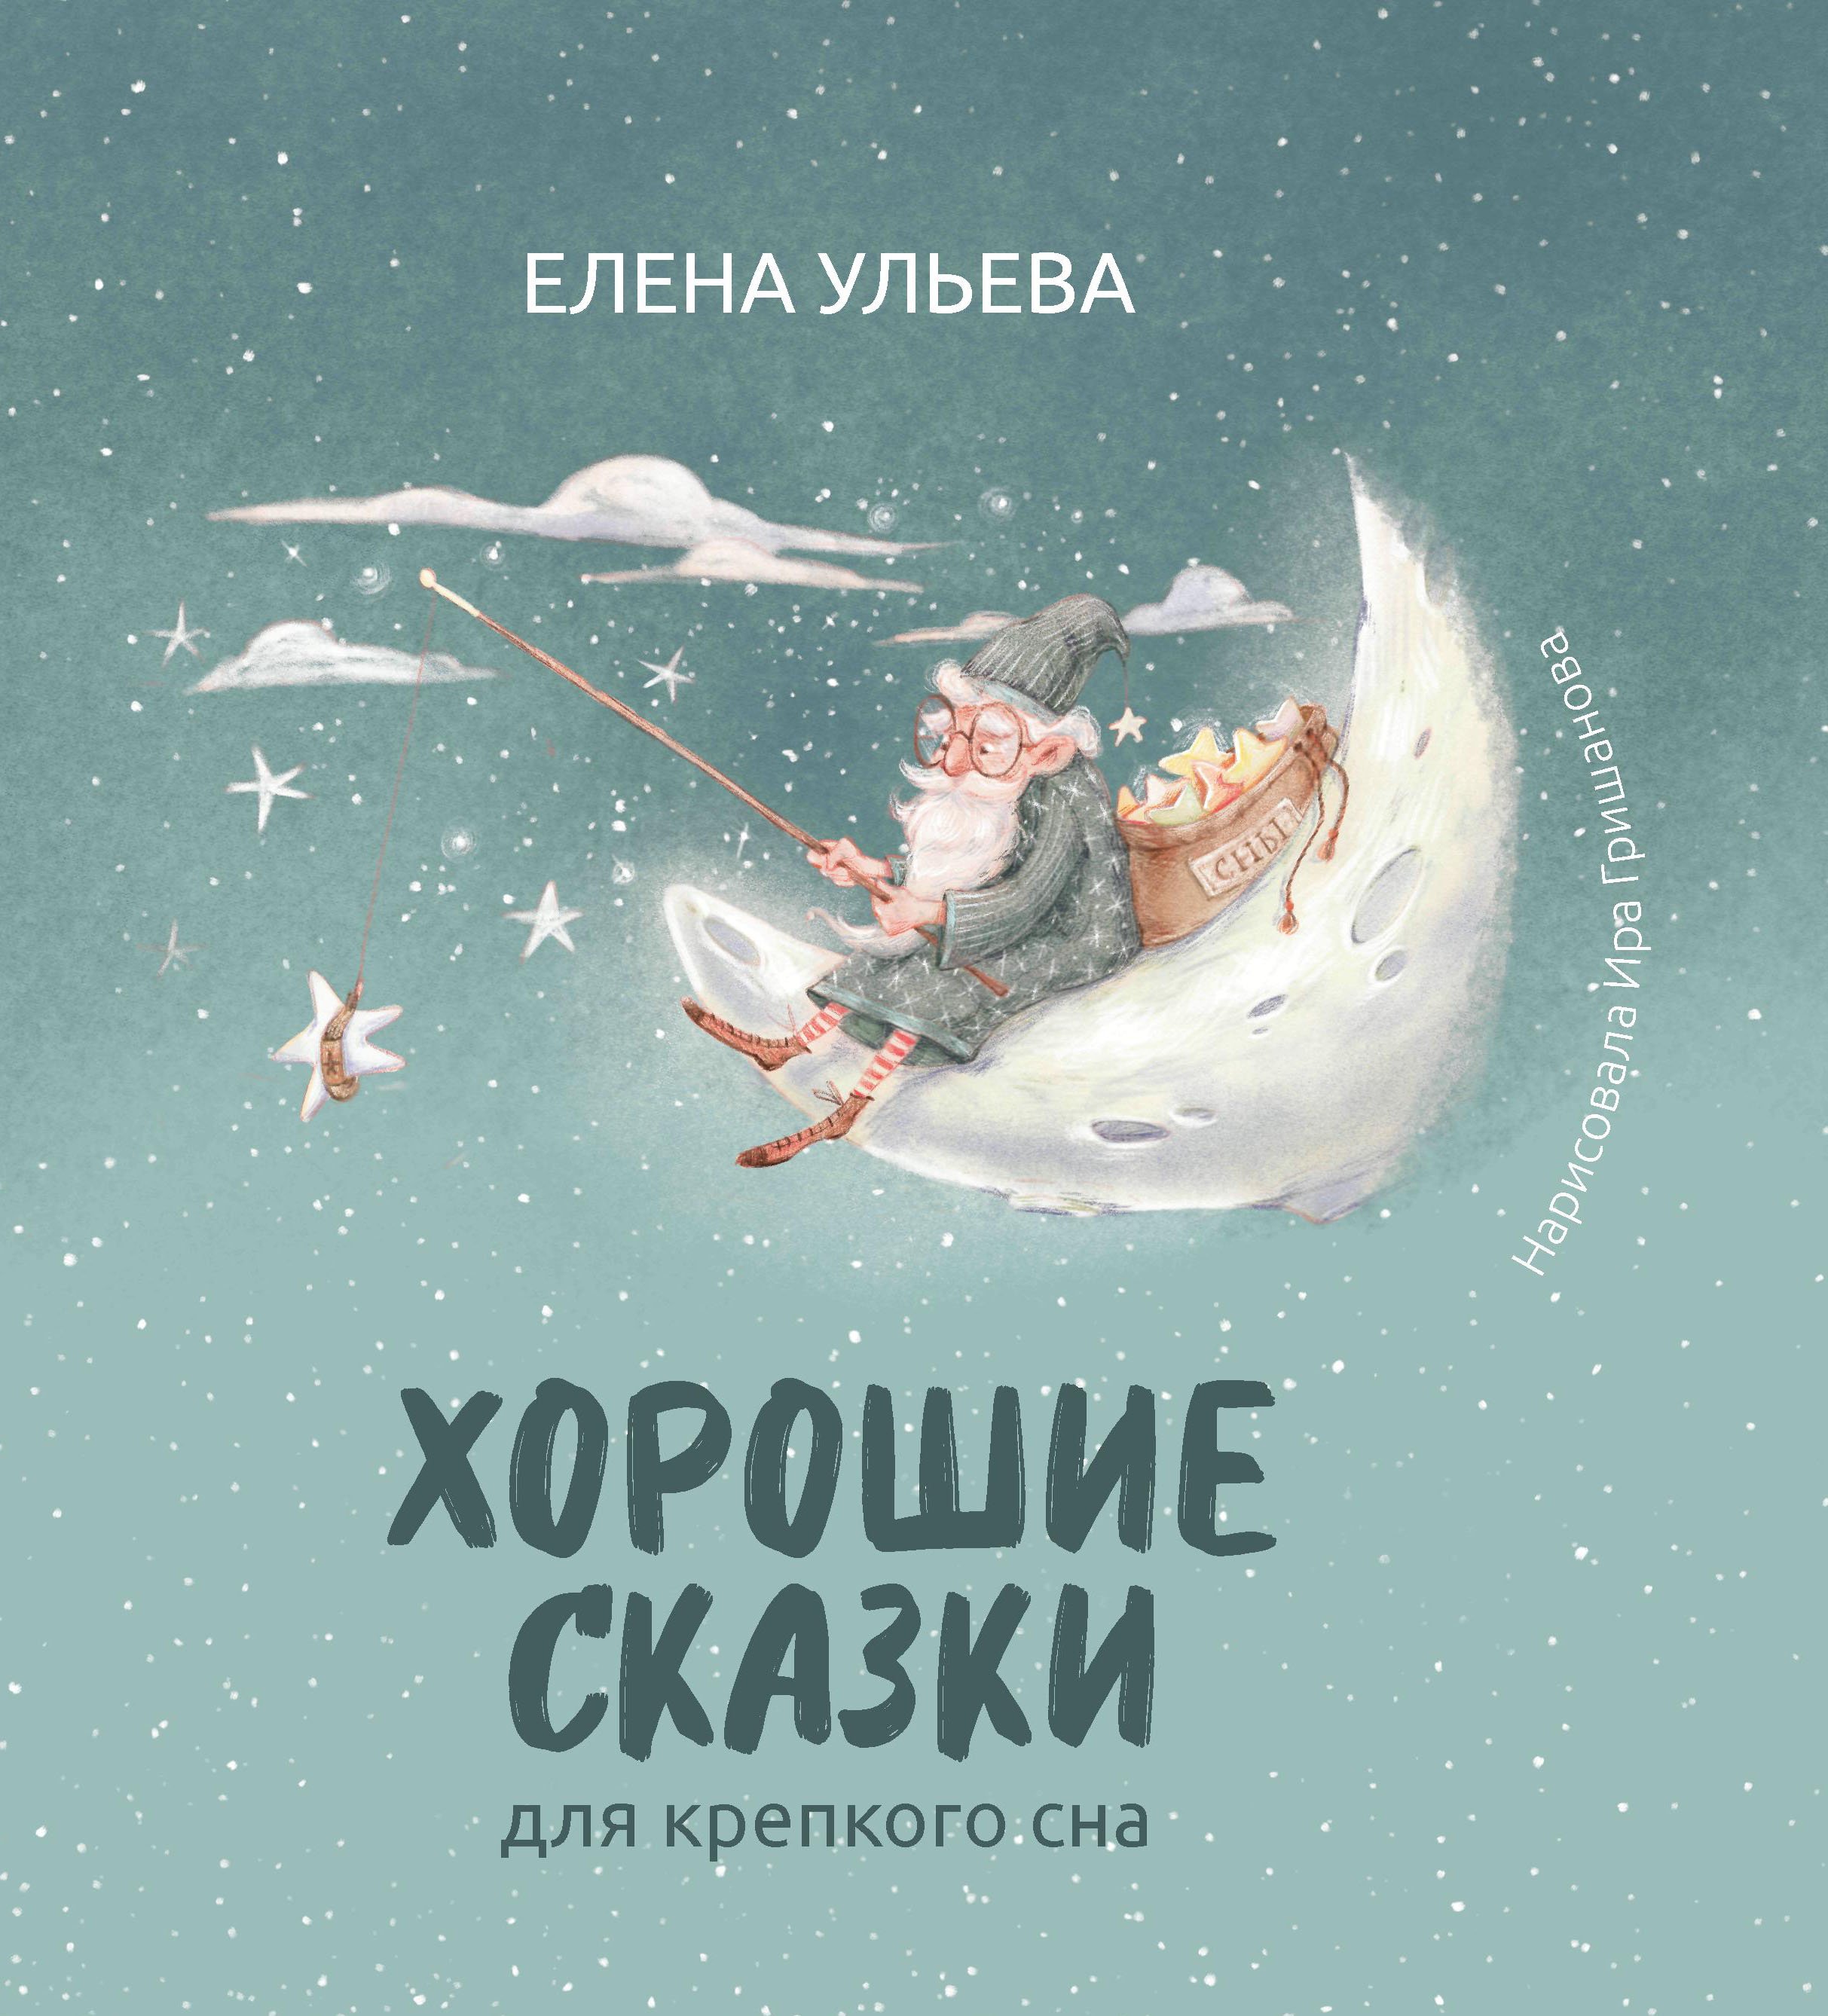 Ульева Елена Александровна - Хорошие сказки для крепкого сна